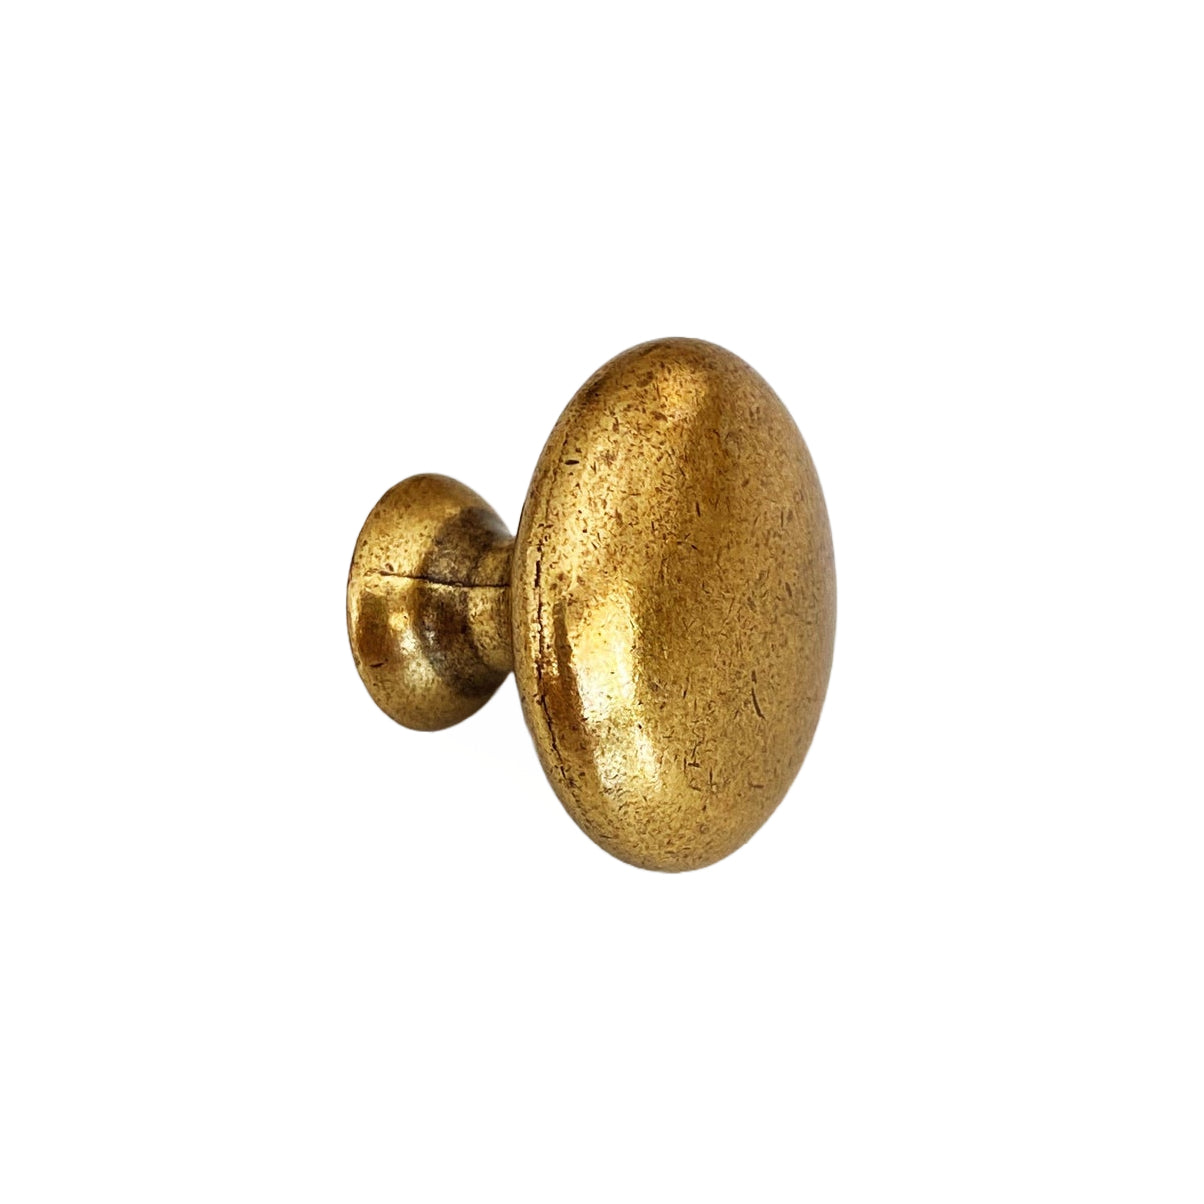 Antique Brass Finish Small Round Cabinet Knob